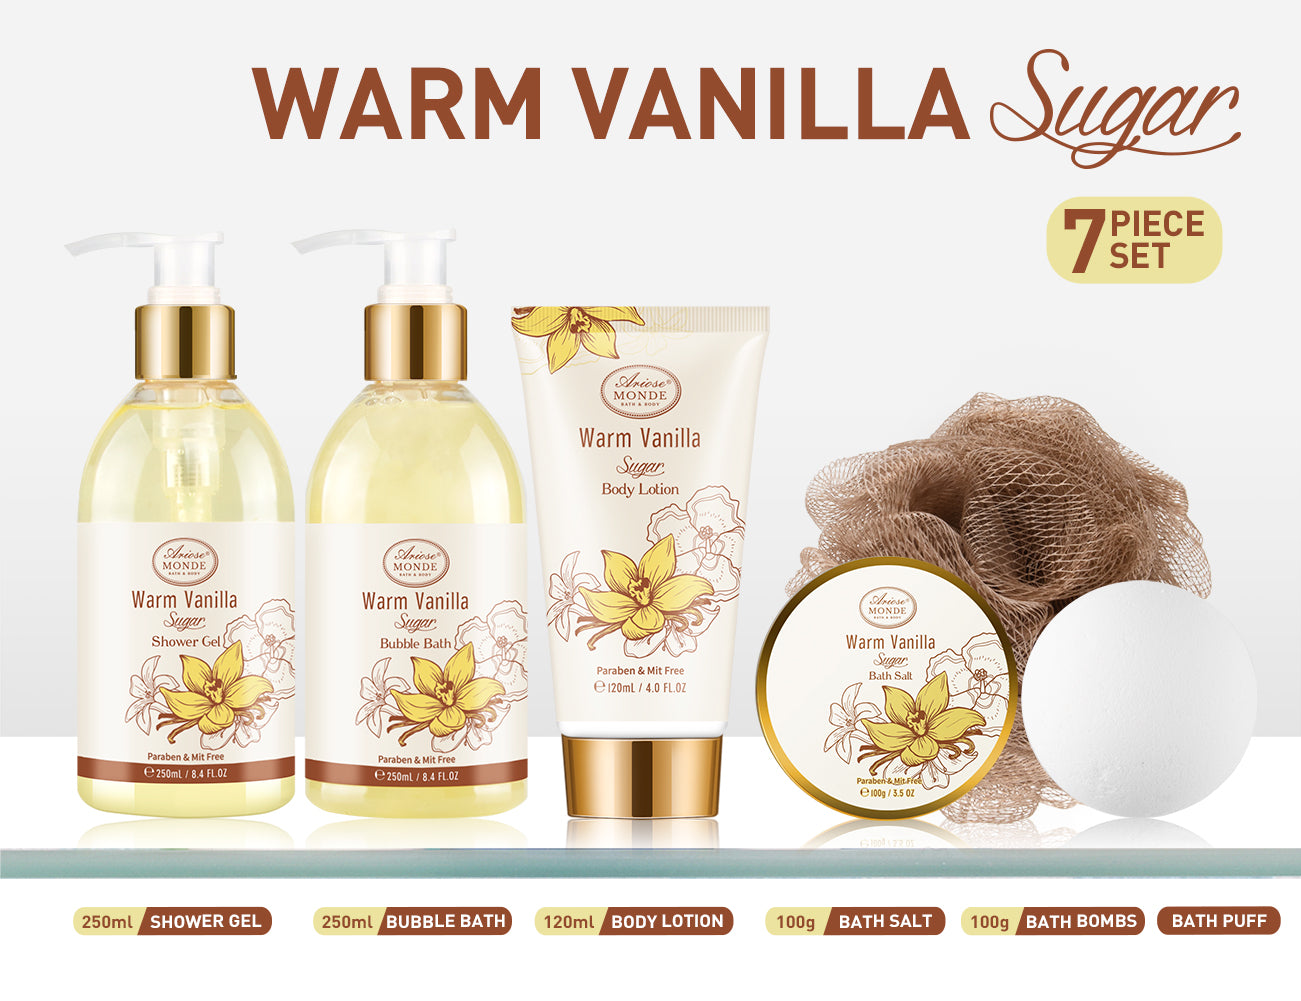 Warm Vanilla Sugar Body Oil